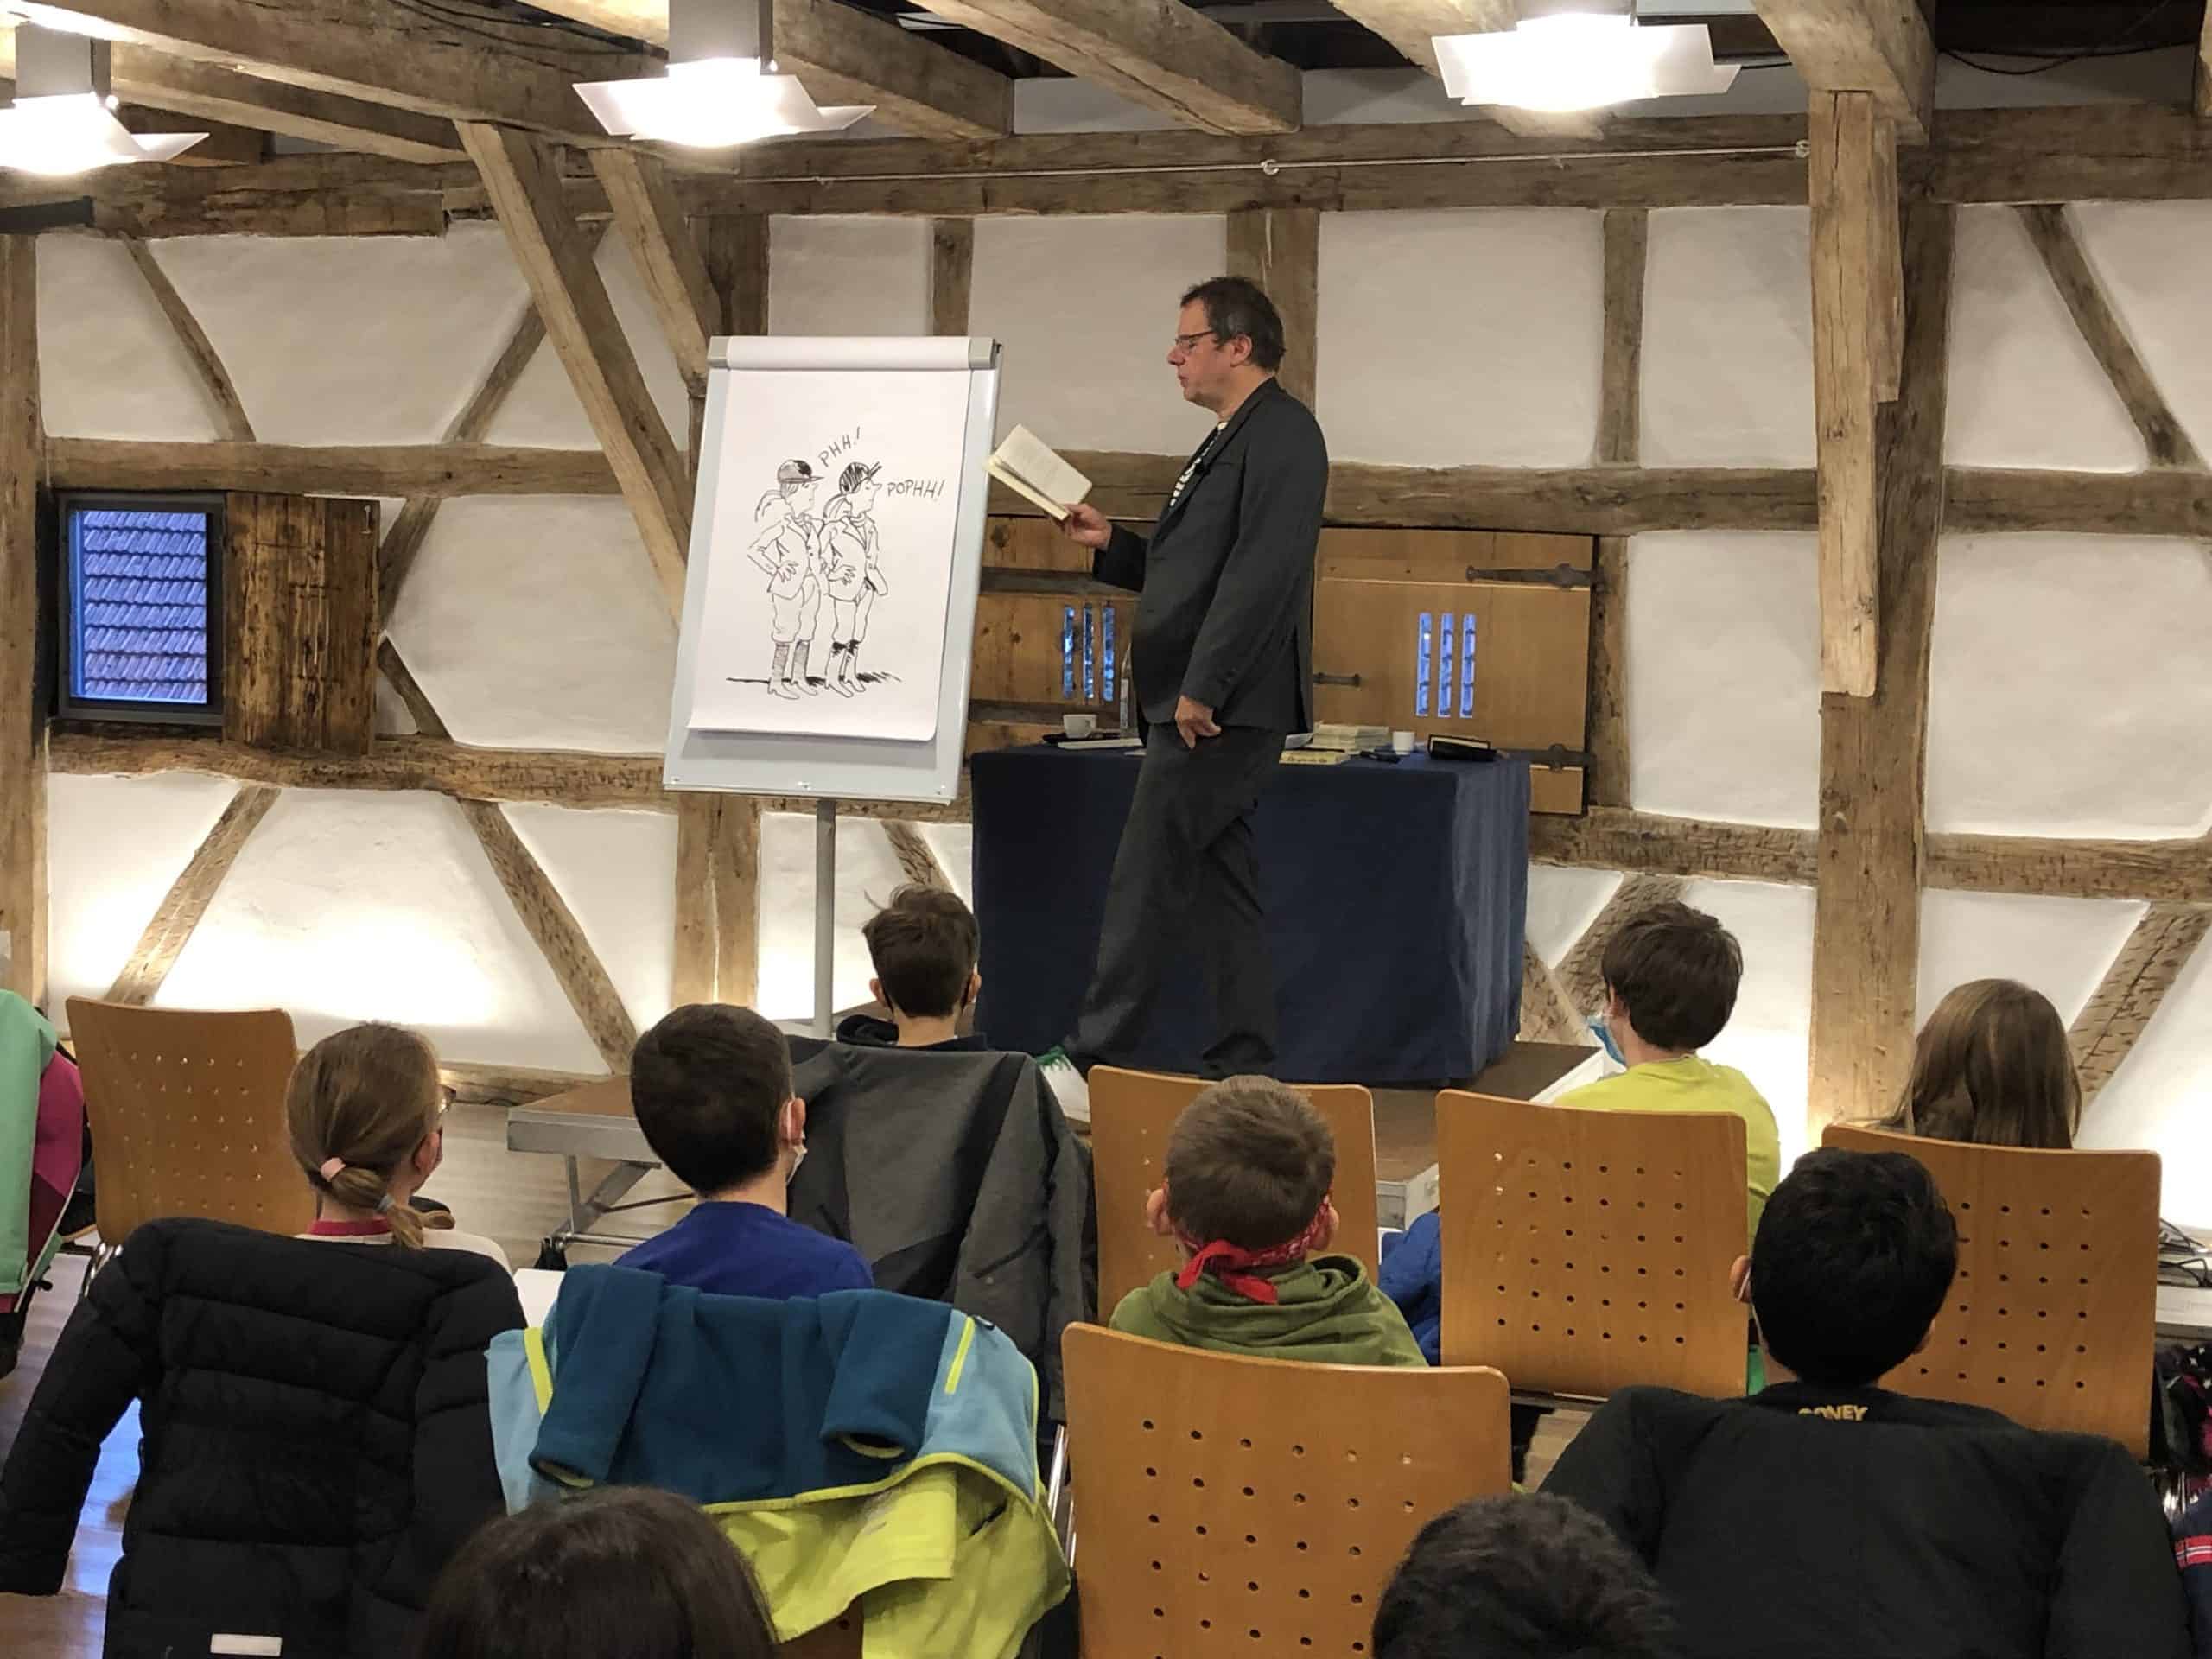 Pfiffige Autorenlesung von Rüdiger Bertram an der Grundschule der Gemeinschaftsschule Bibrisschule Herbrechtingen